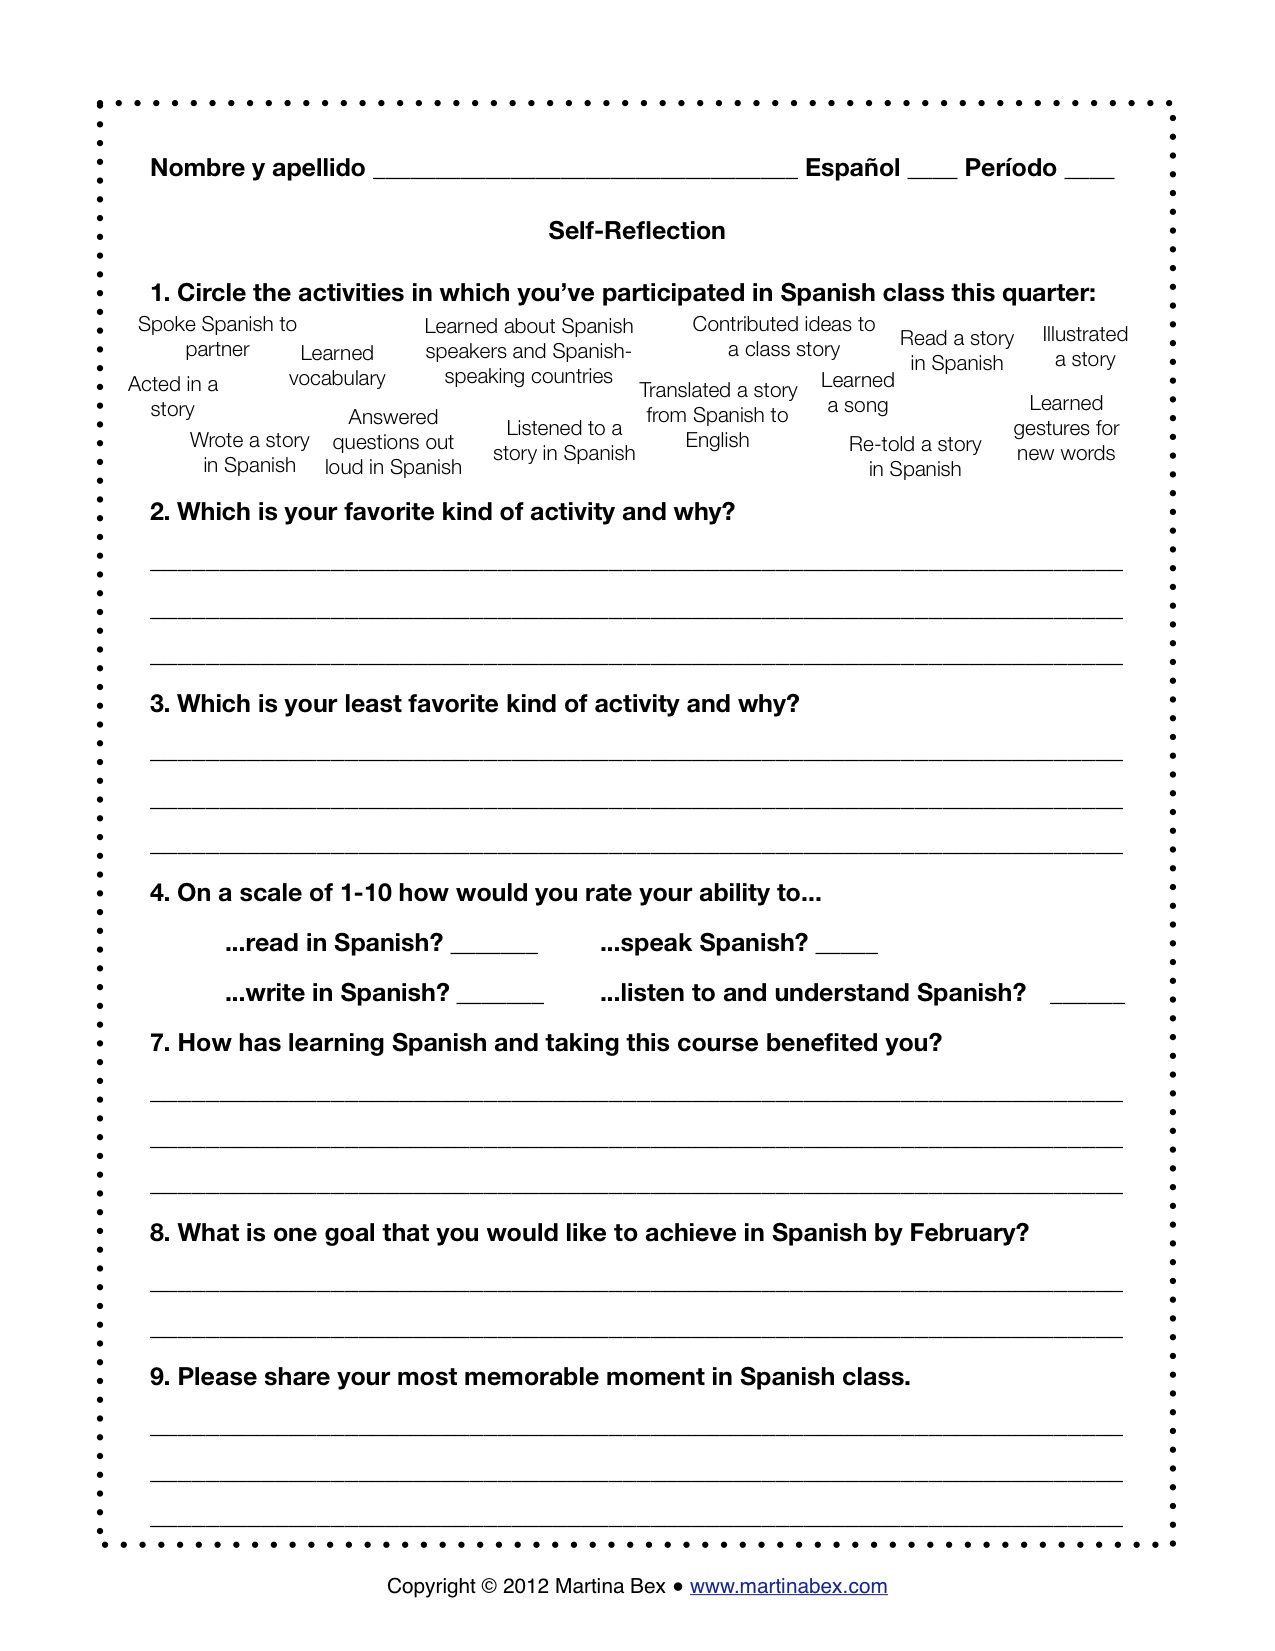 Student Behavior Reflection Sheet Template Image